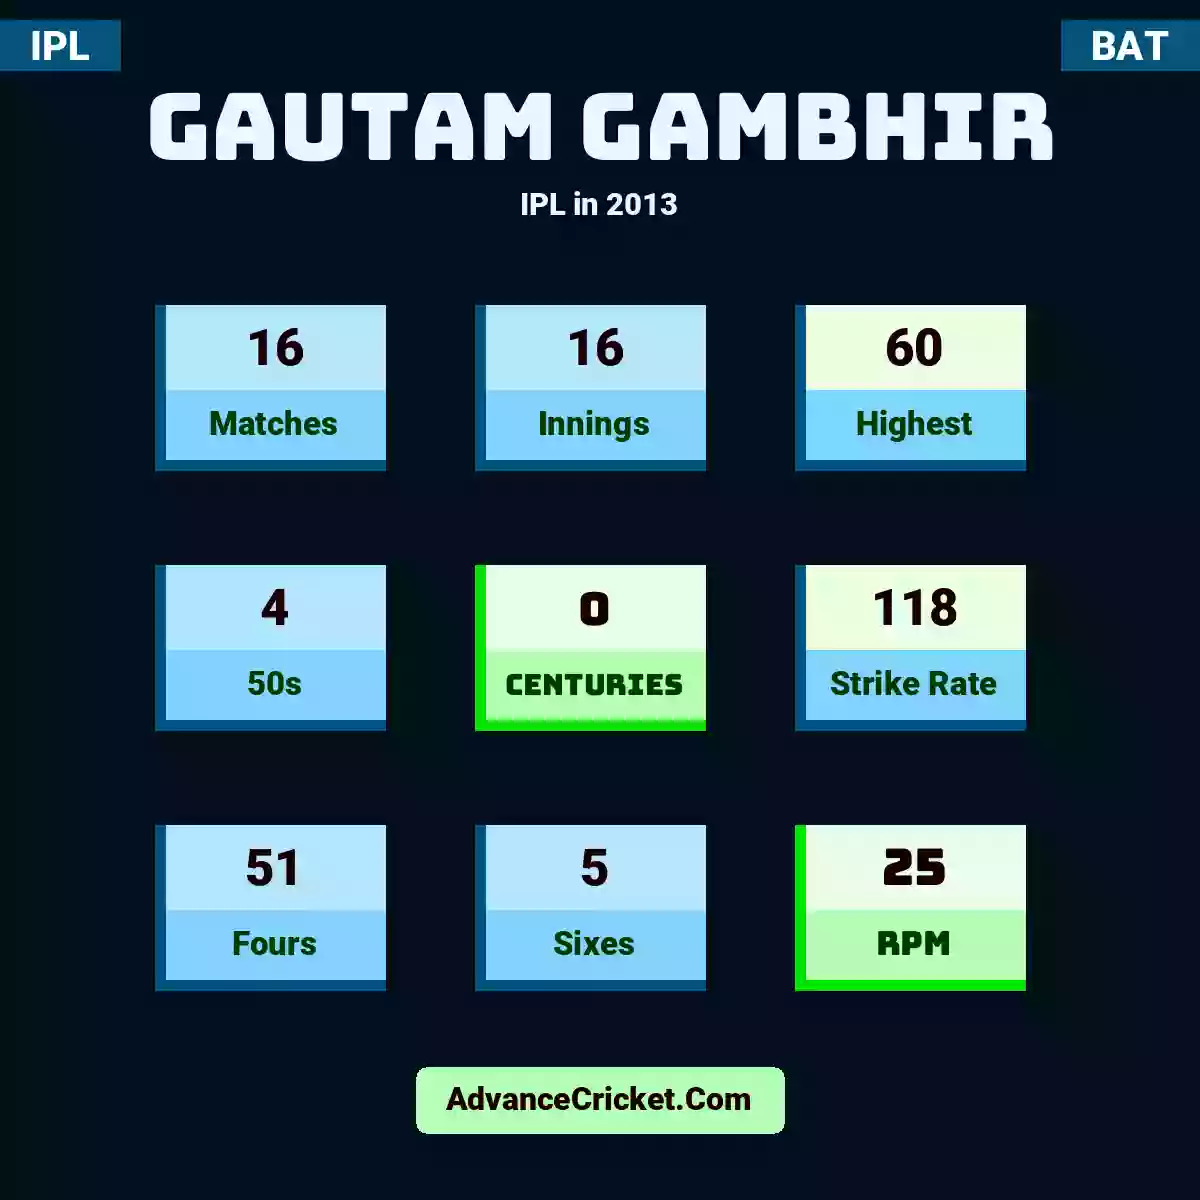 Gautam Gambhir IPL  in 2013, Gautam Gambhir played 16 matches, scored 60 runs as highest, 4 half-centuries, and 0 centuries, with a strike rate of 118. G.Gambhir hit 51 fours and 5 sixes, with an RPM of 25.